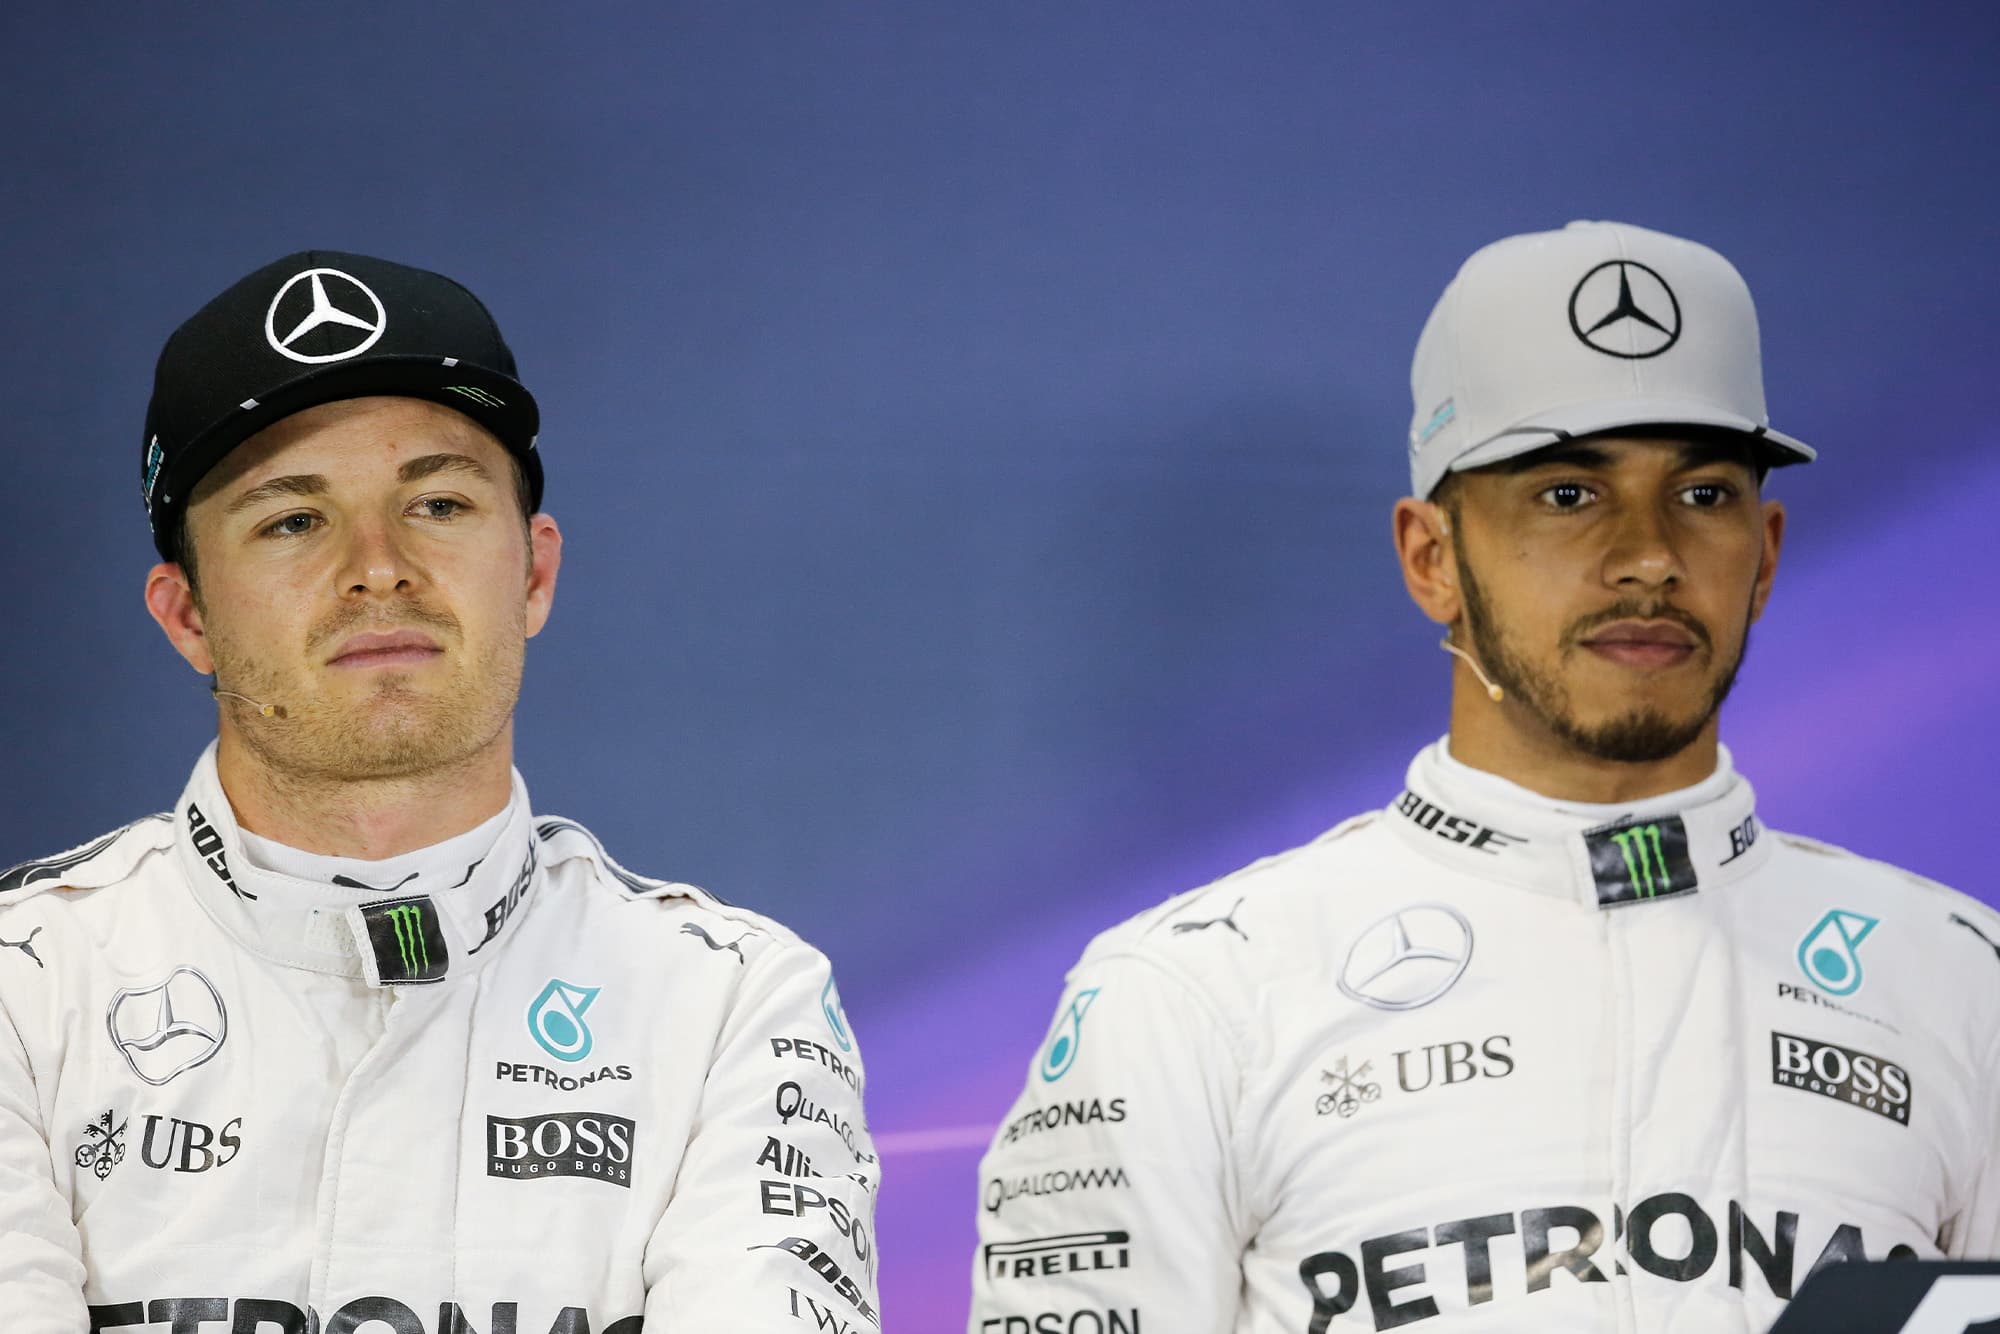 Lewis Hamilton and Nico Rosberg during the 2016 Formula 1 season